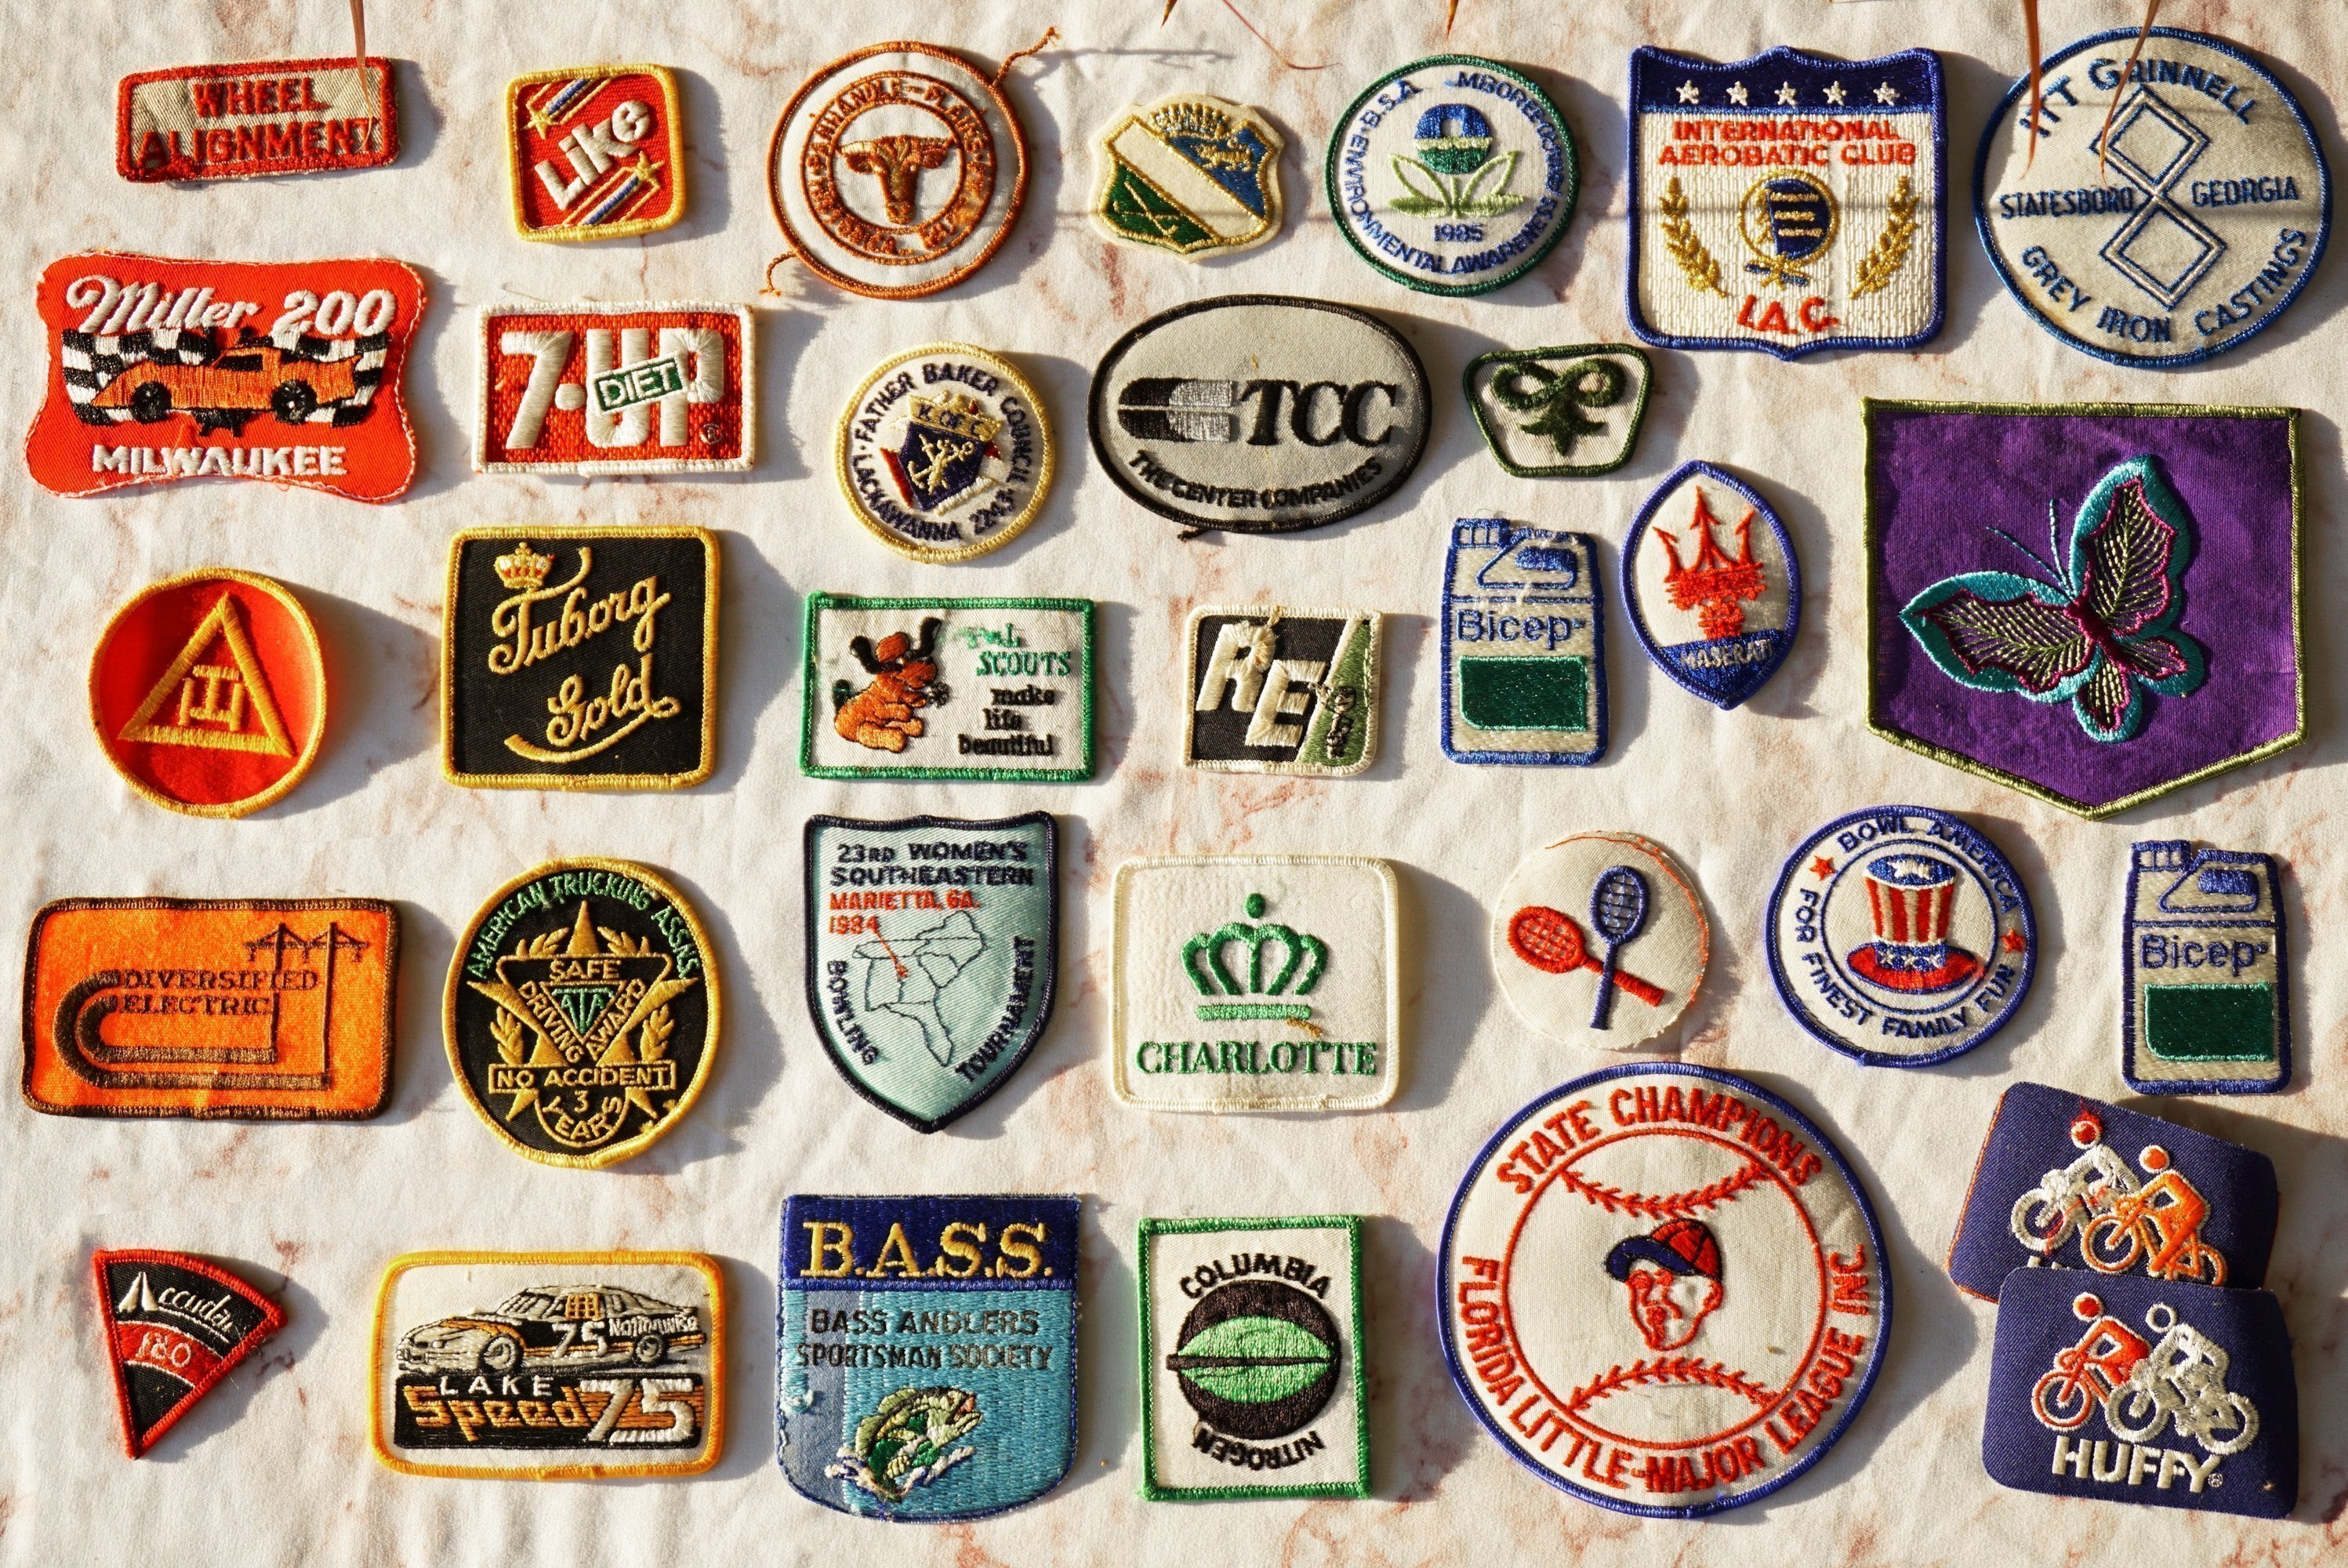 Vintage patches